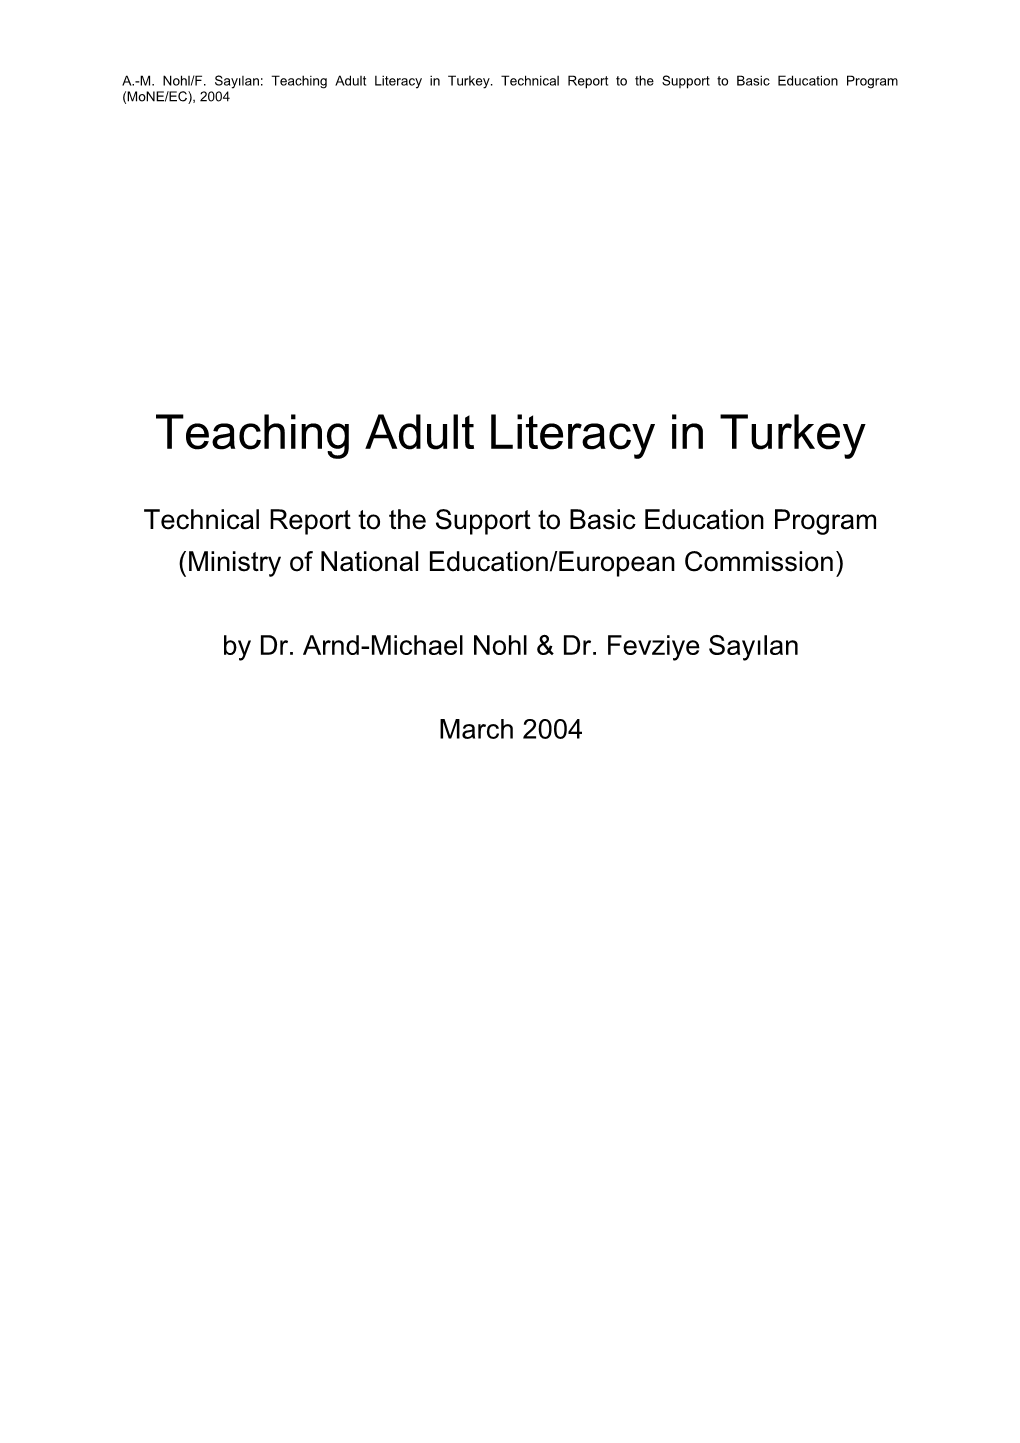 Teaching Adult Literacy in Turkey